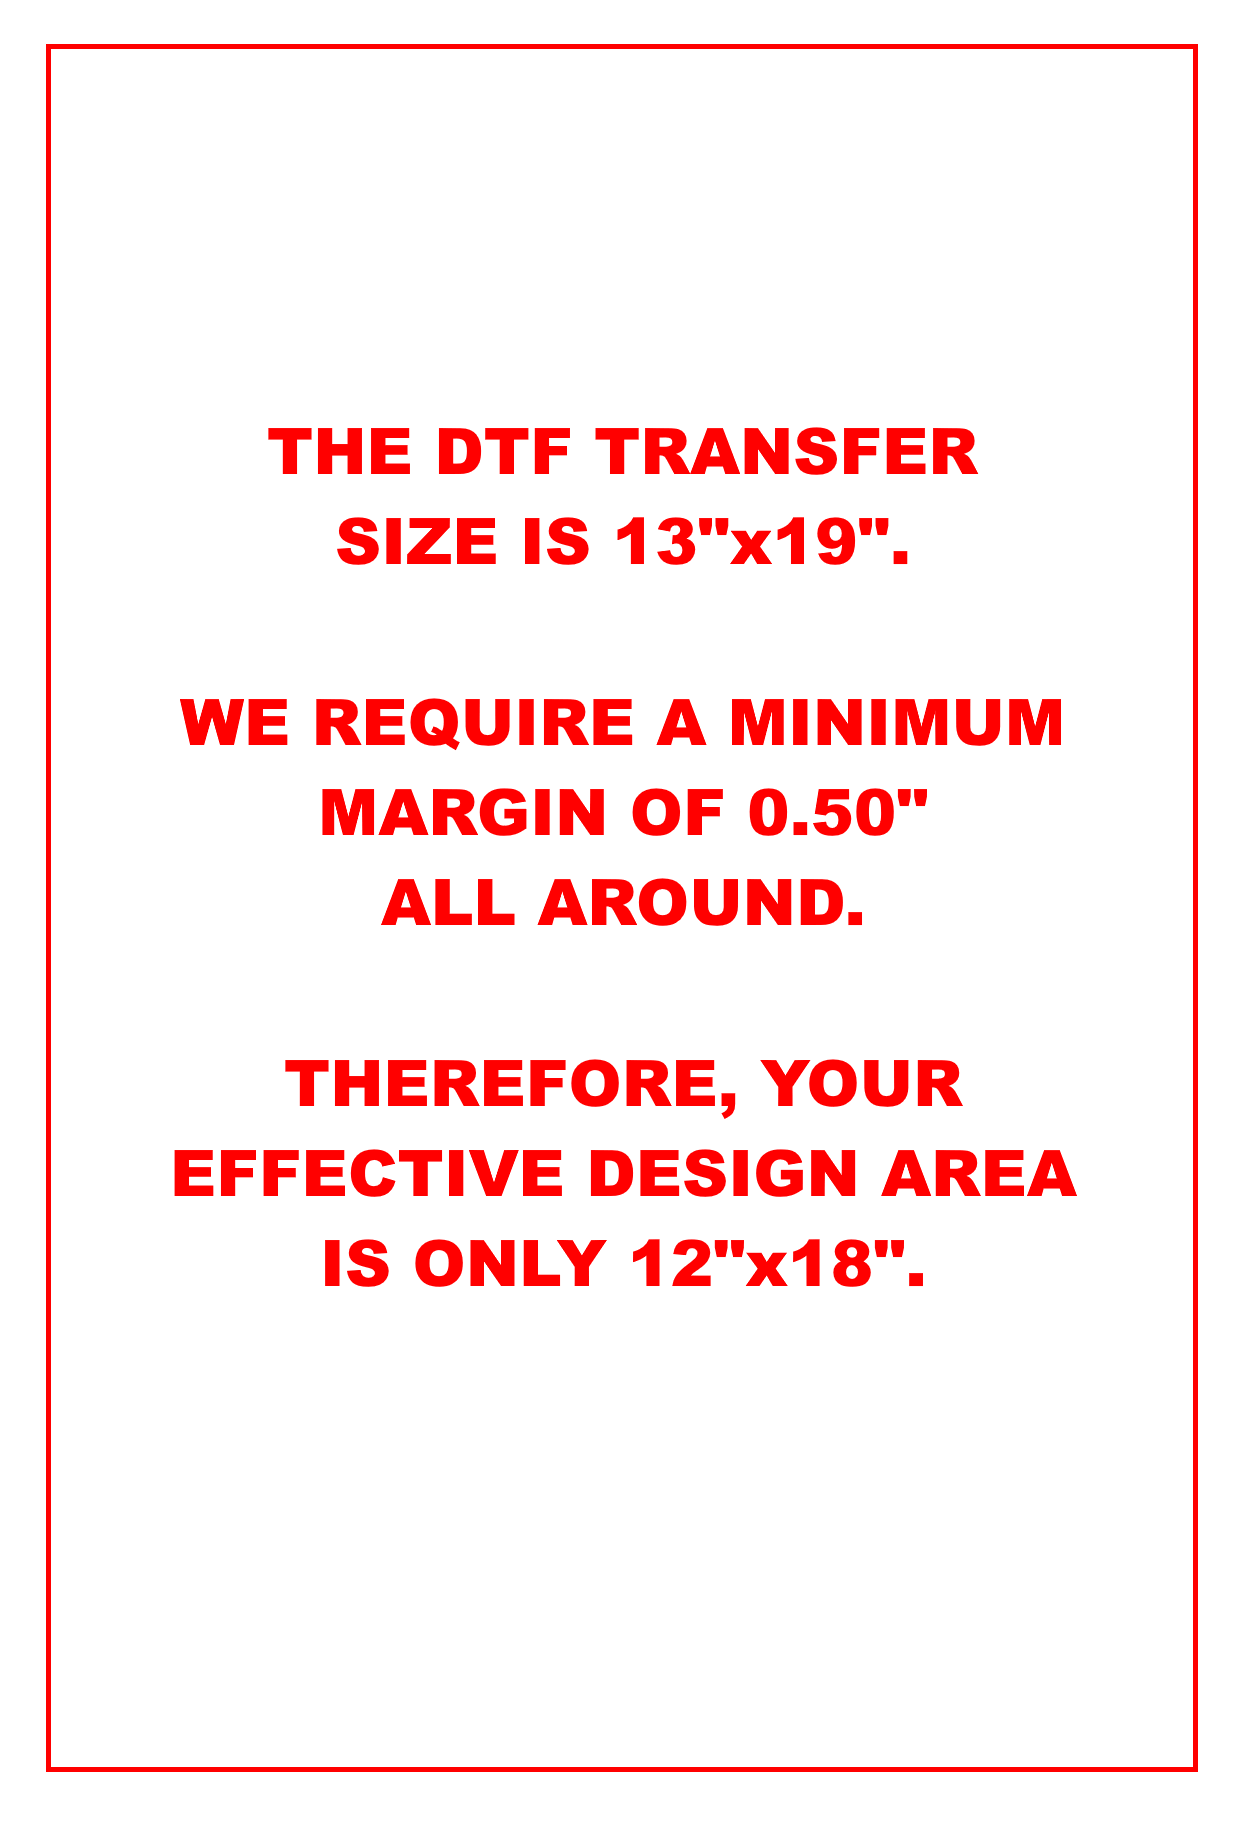 Custom DTF transfer design